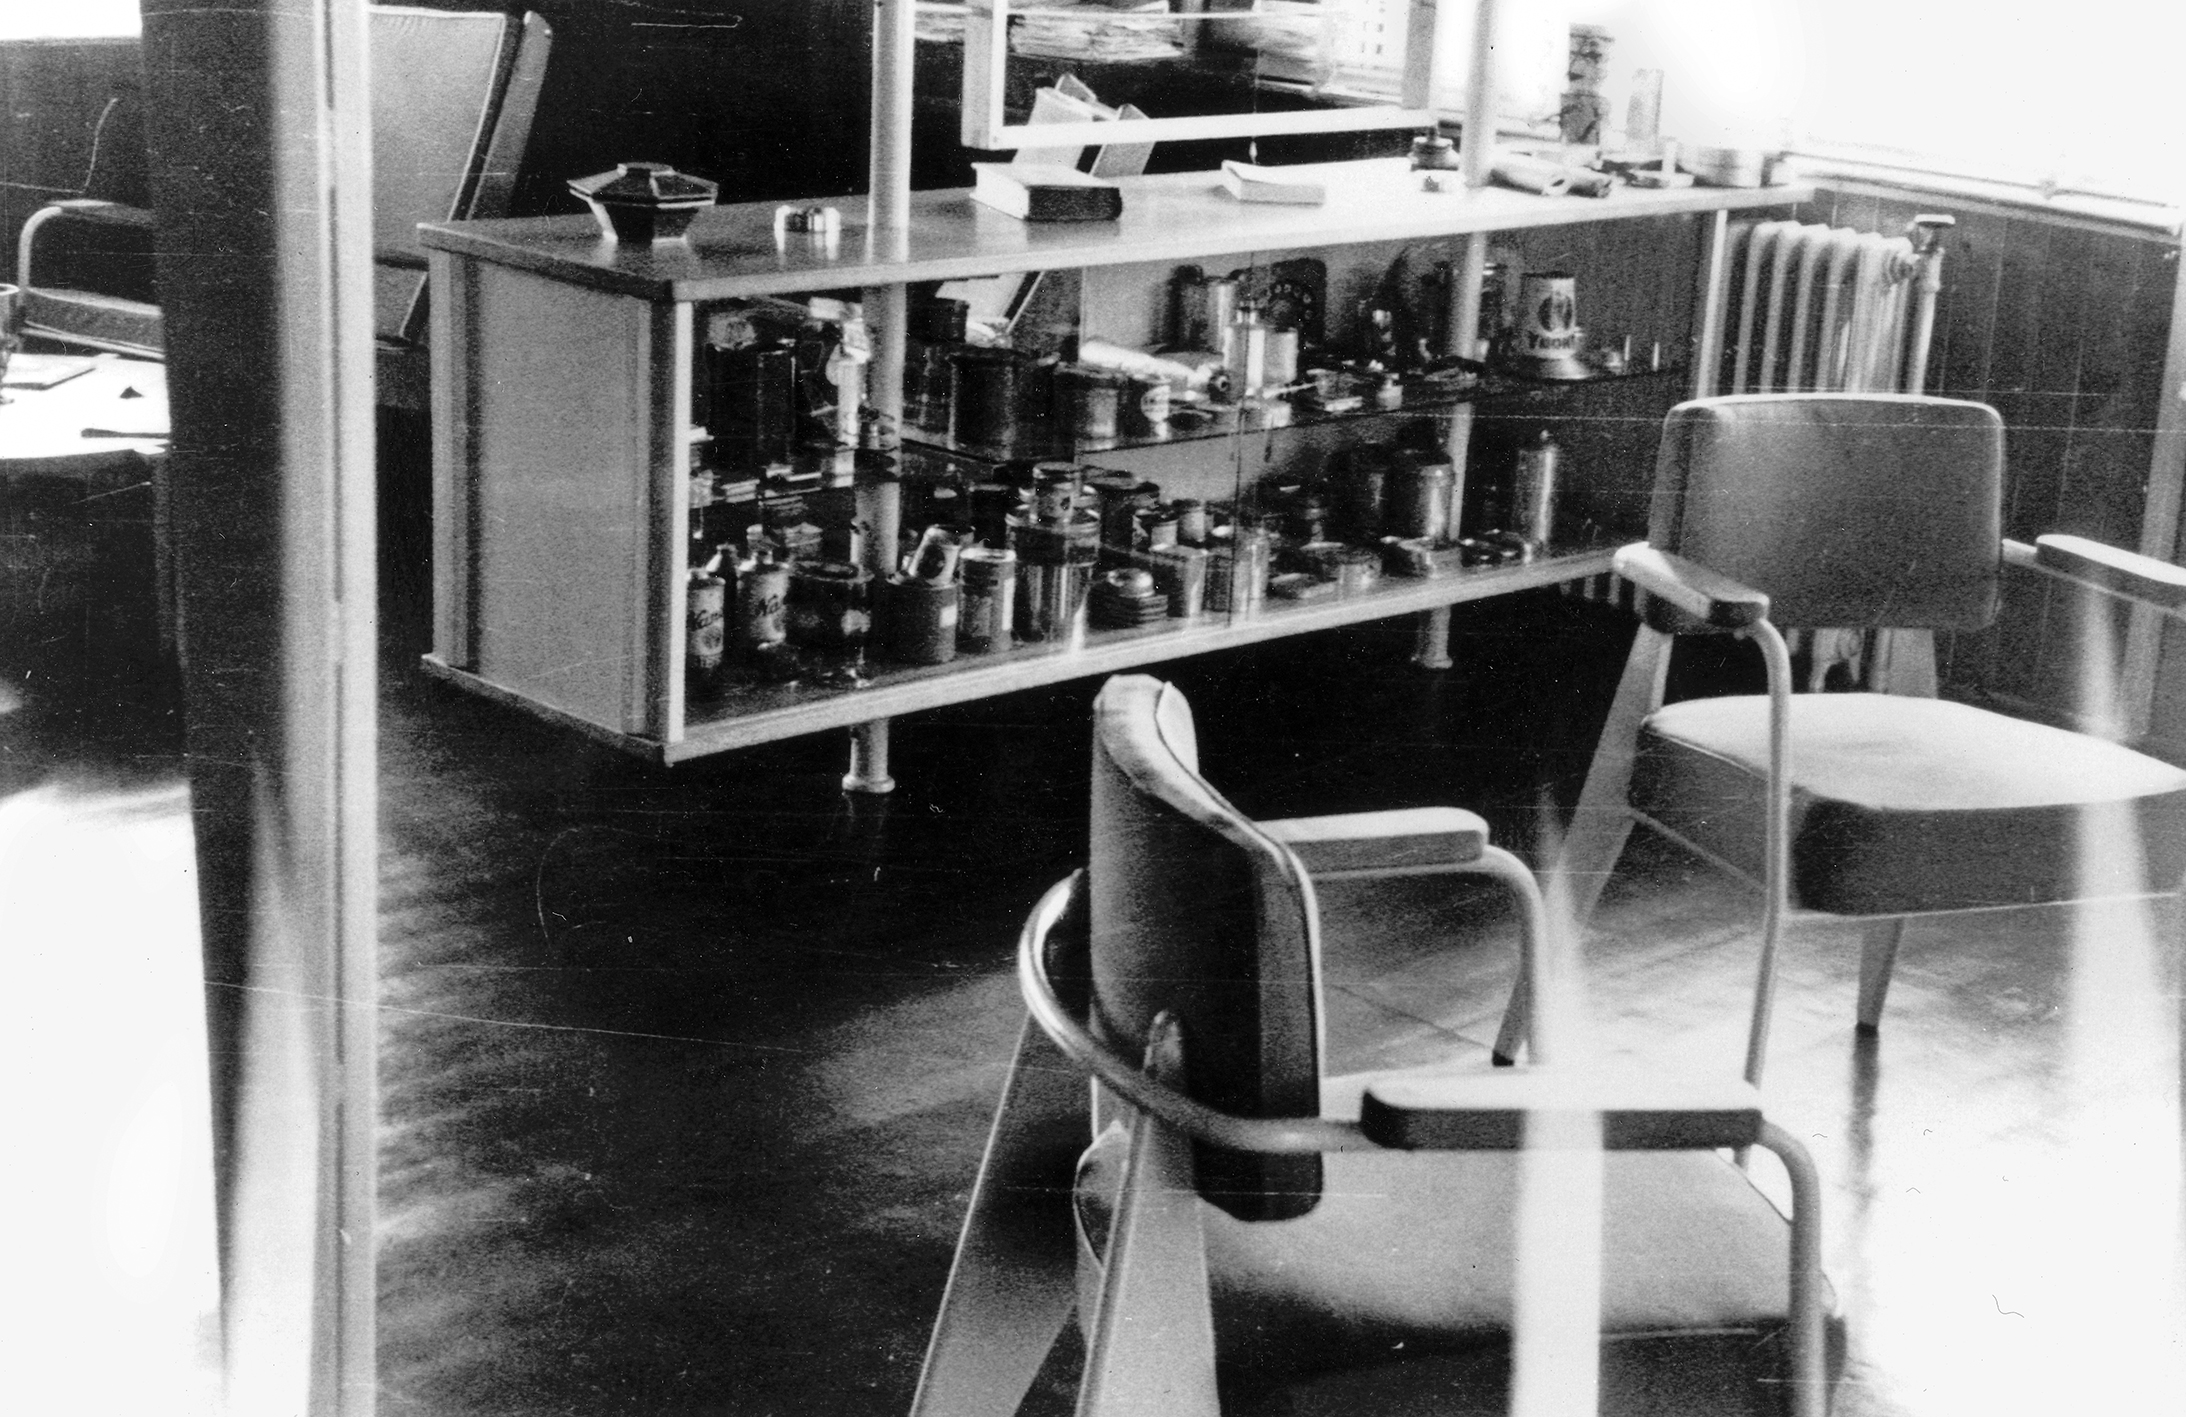 Pierre Bindschedler’s office, Ferembal plant, Nancy, 1949. “Meuble équilibré” serving as a divider.